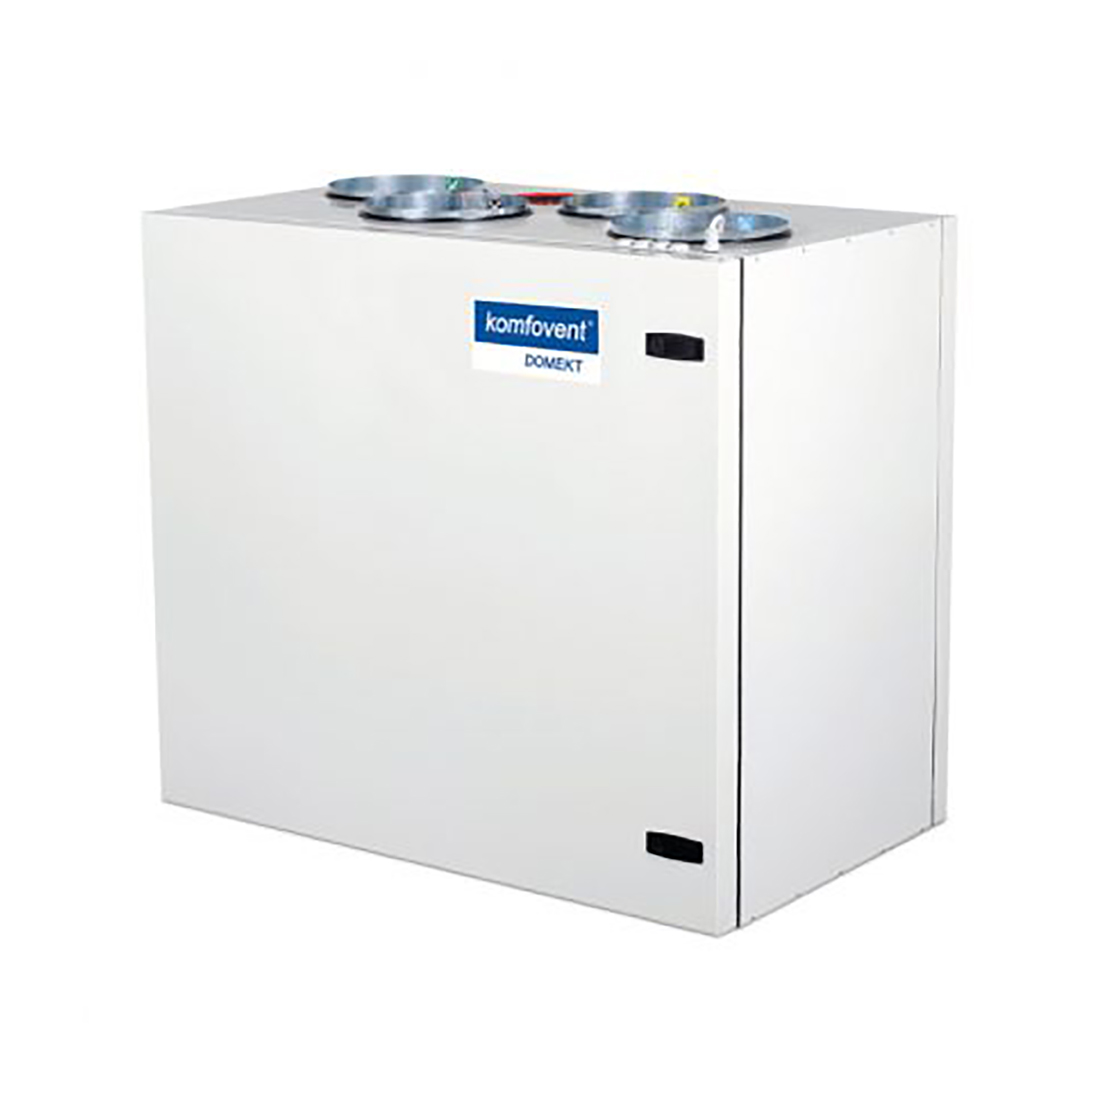 Komfovent Domekt R-700-V Heat Recovery Unit